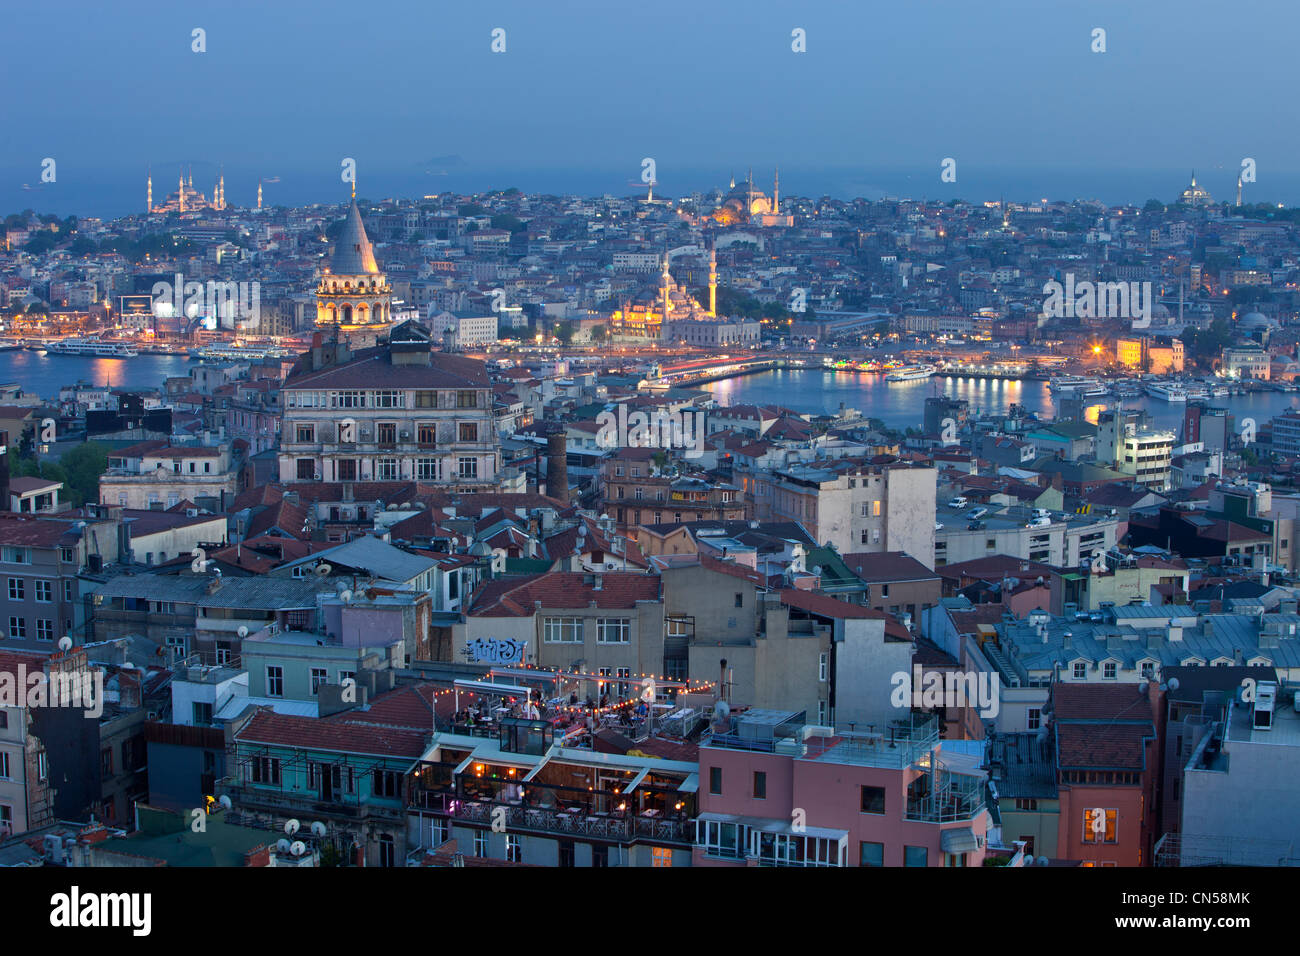 Turchia, Istanbul, Beyoglu, Tünel distretto, Torre Galata e Moschea Sultan Ahmet Camii (moschea Blu) a sinistra Foto Stock